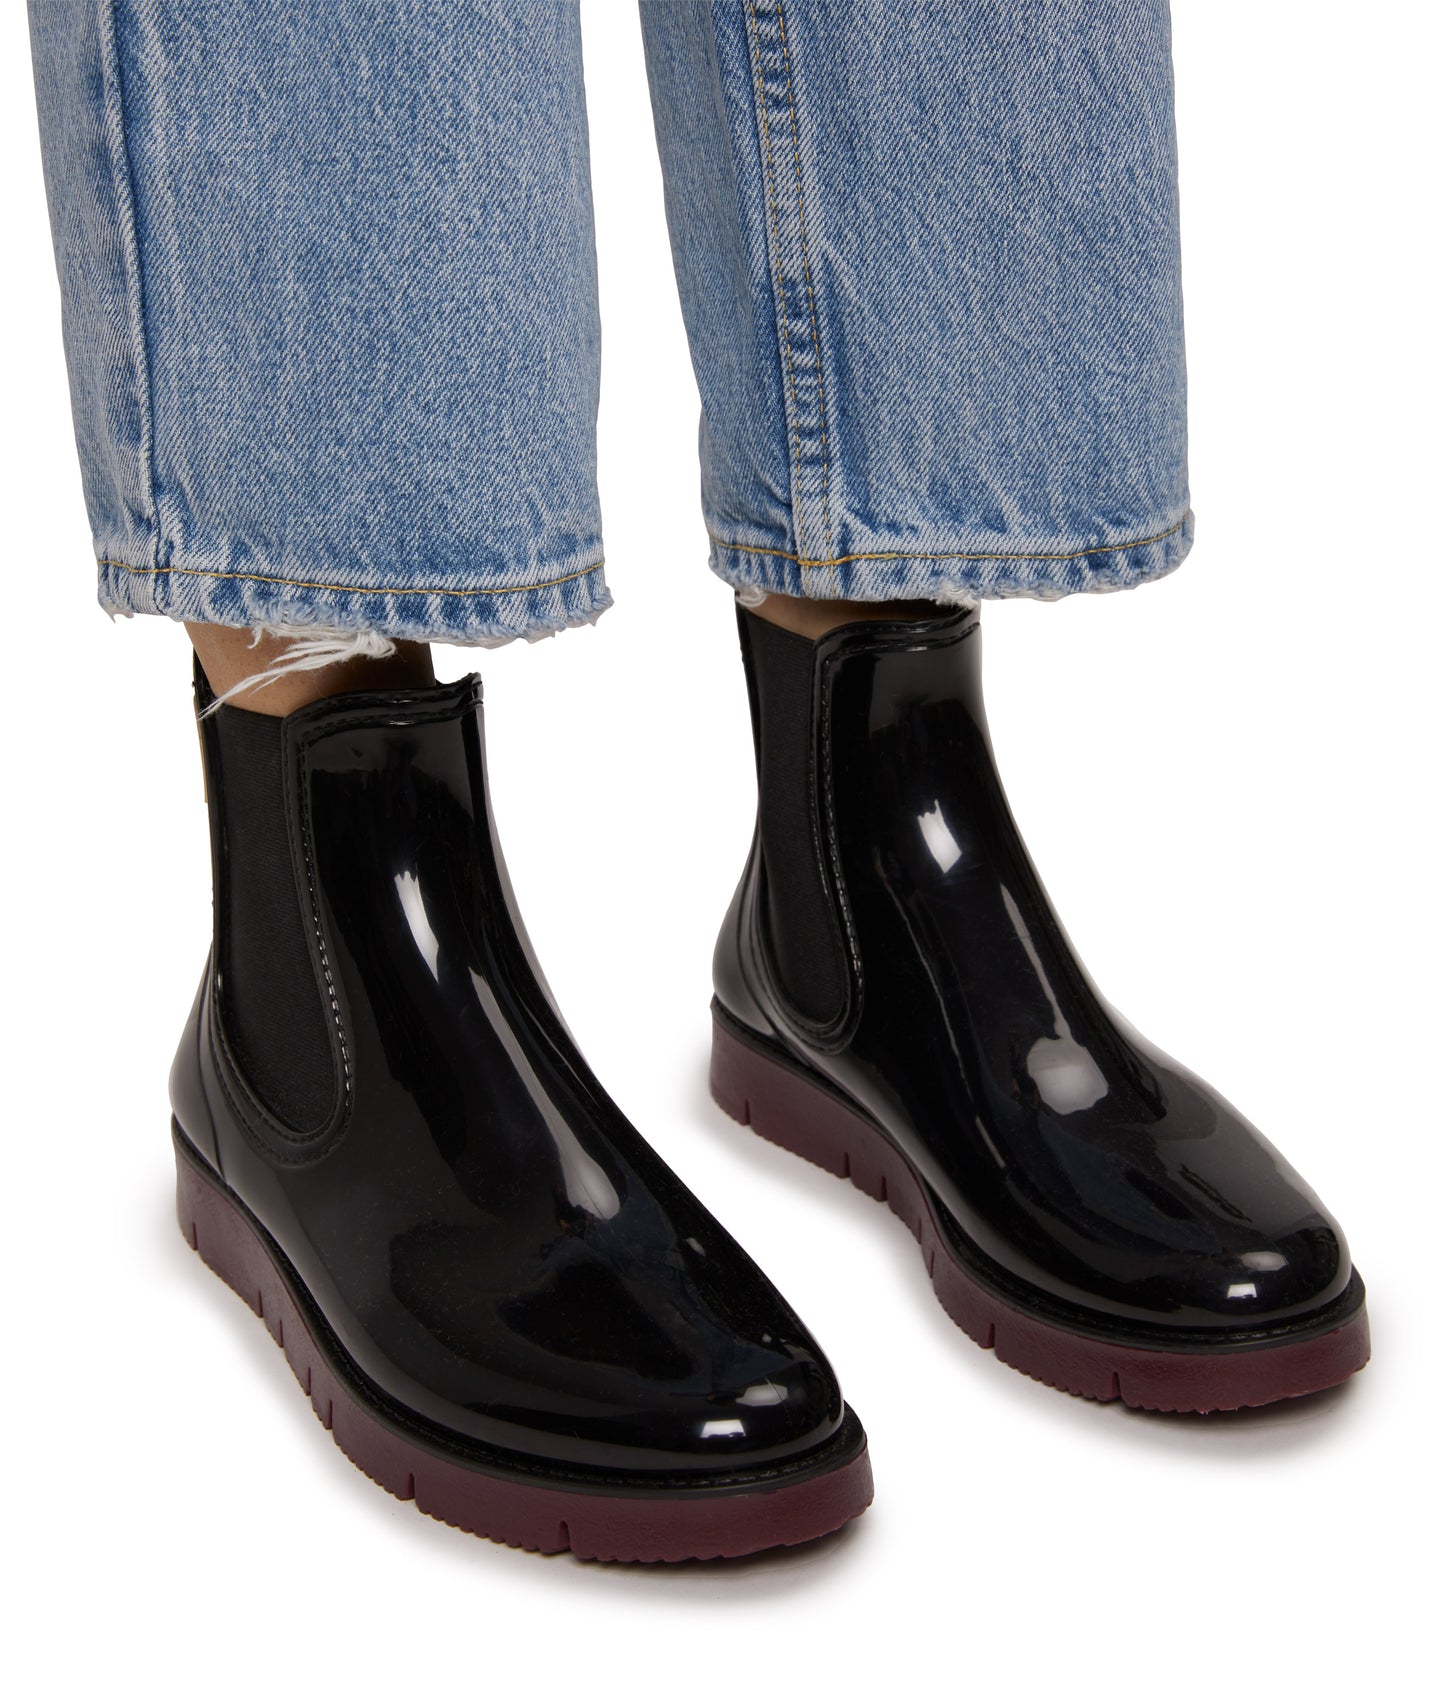 CHELZ Vegan Rain Boots | Color: Black - variant::blkblk